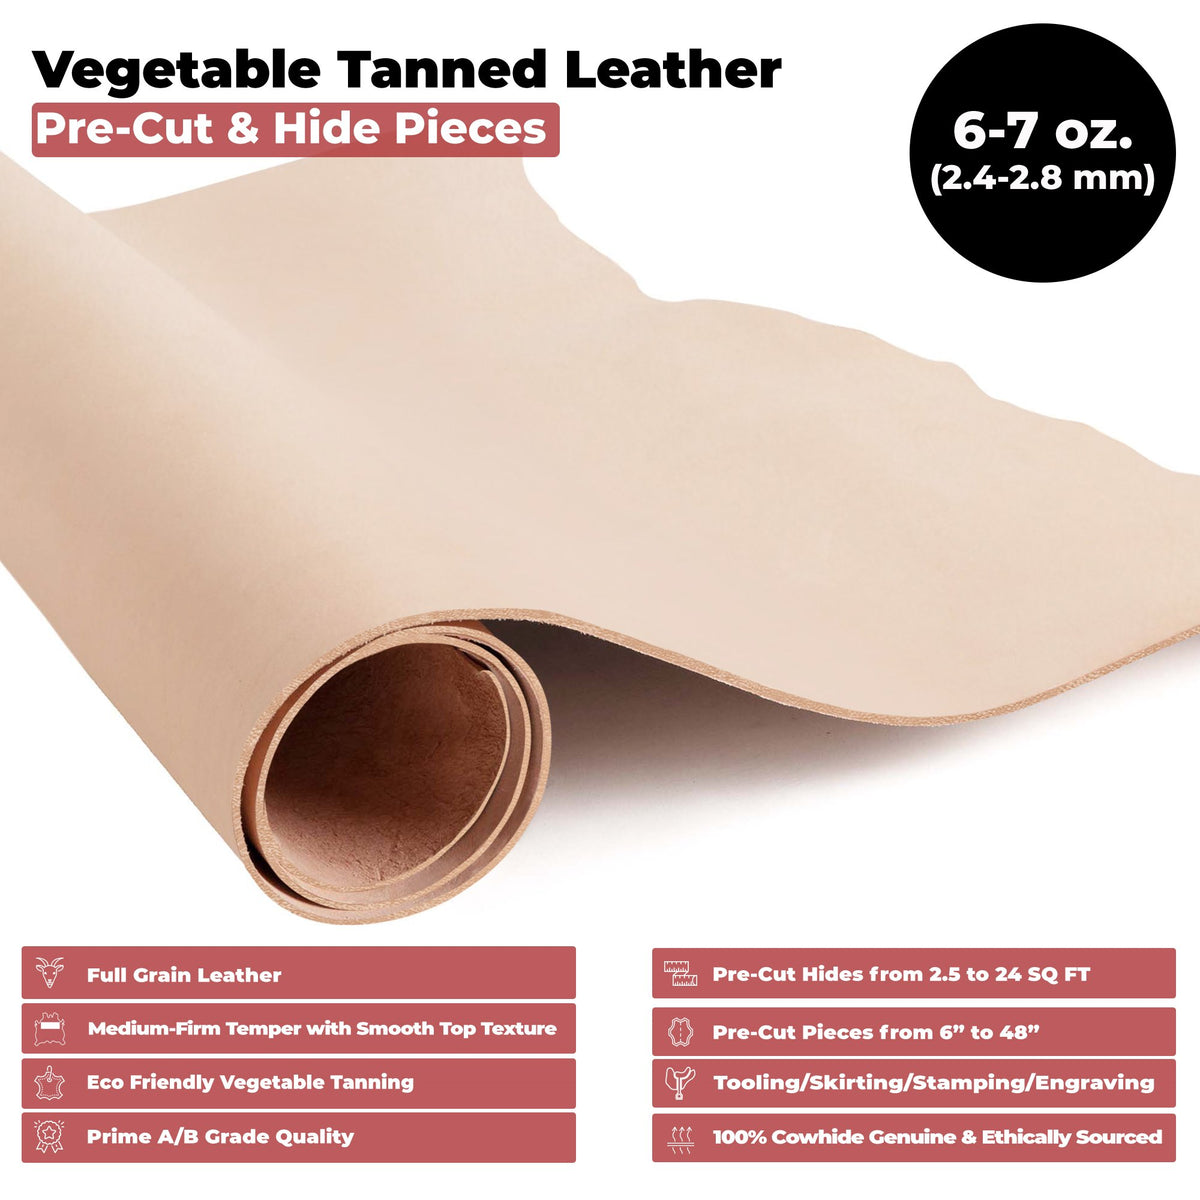 5/6 oz. Veg-Tan Tooling Leather Pre-Cut & Pieces Natural Color